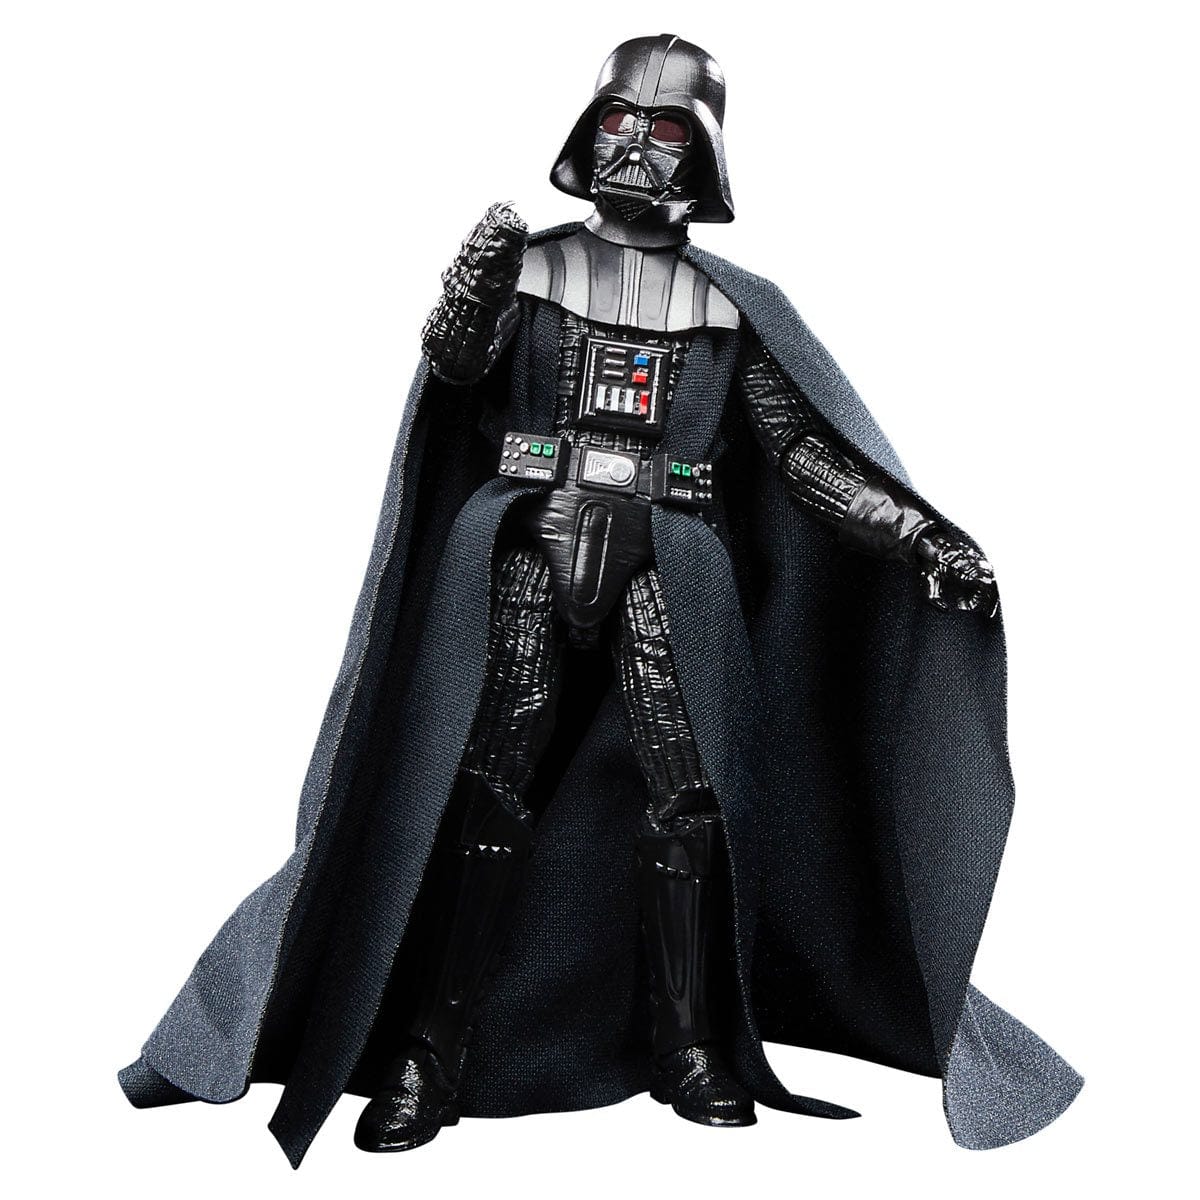 Star Wars Figures - 6" The Black Series - Ep VI ROTJ 40th Anniv - Darth Vader 